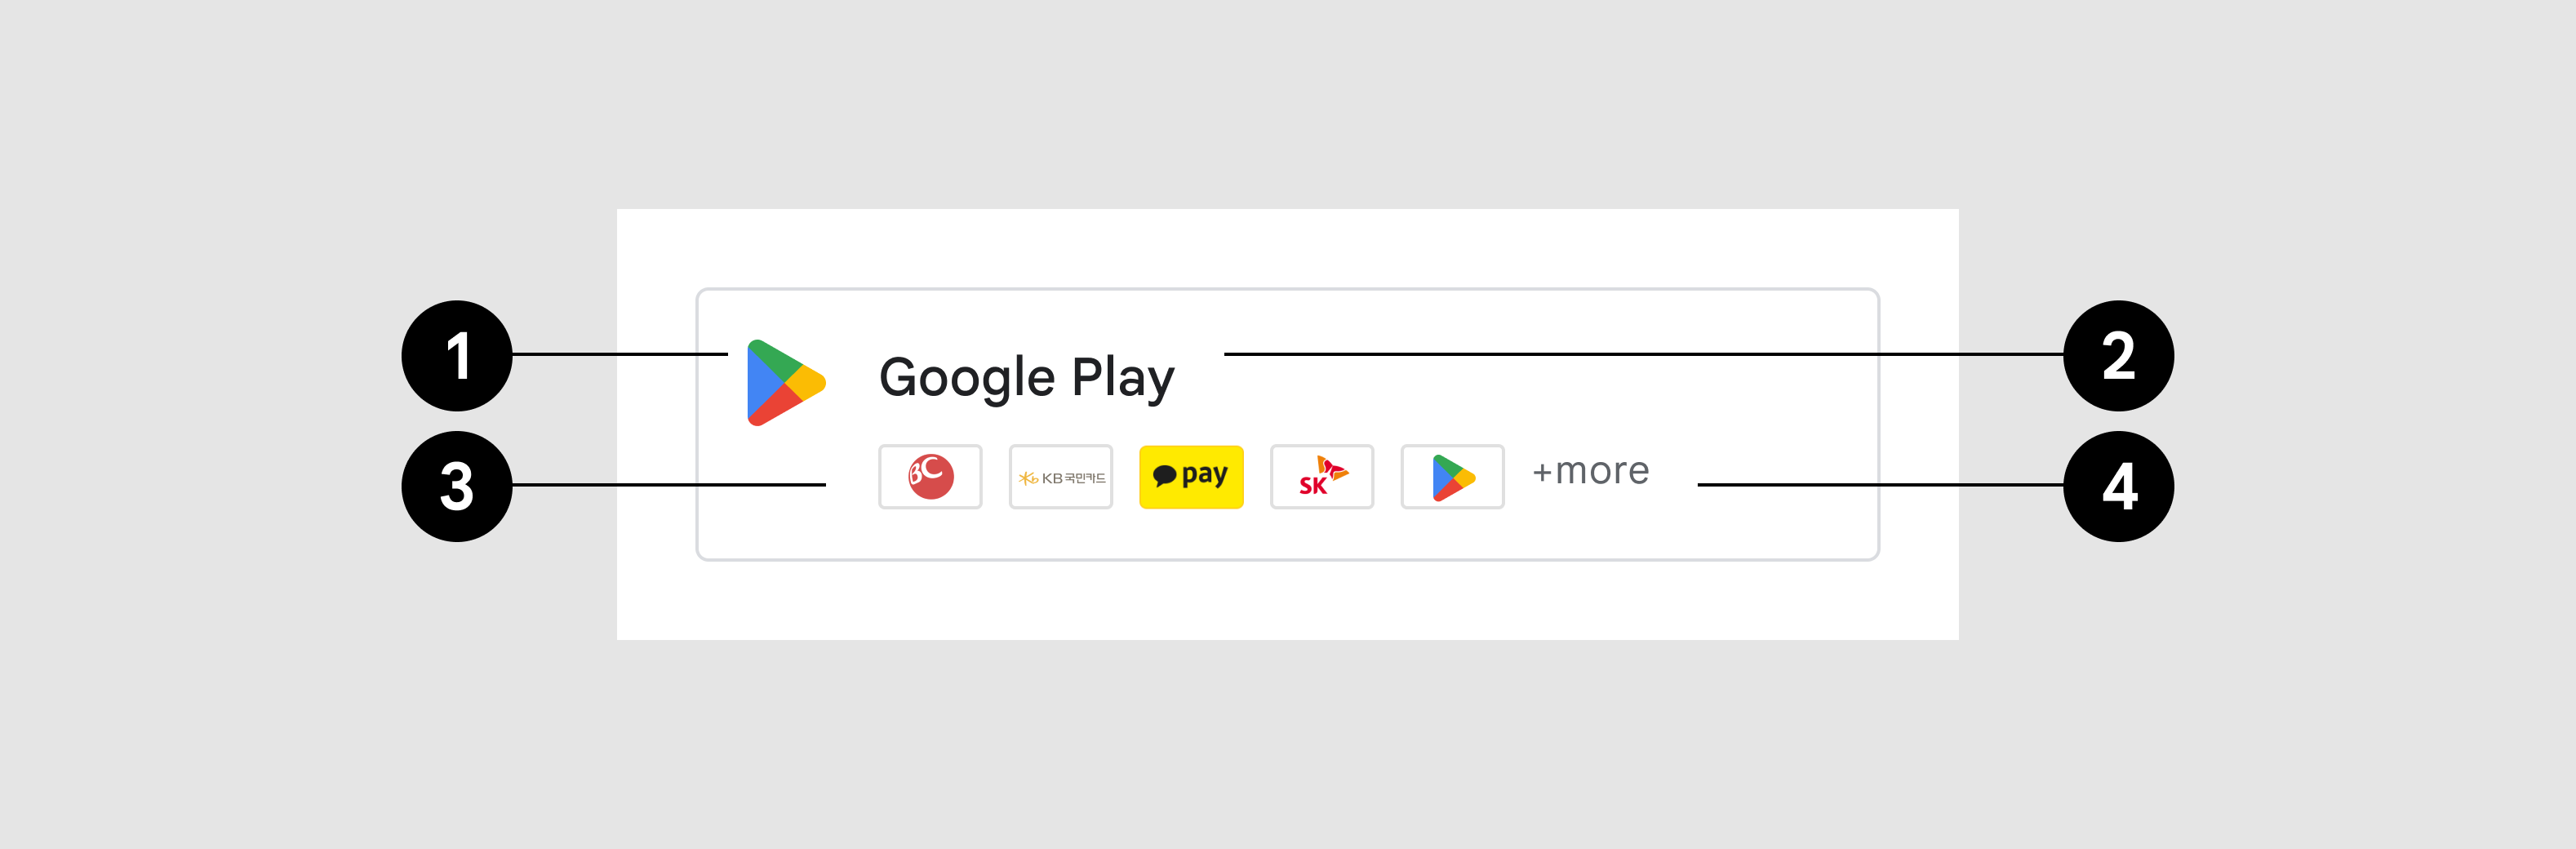 Google Play ボタン